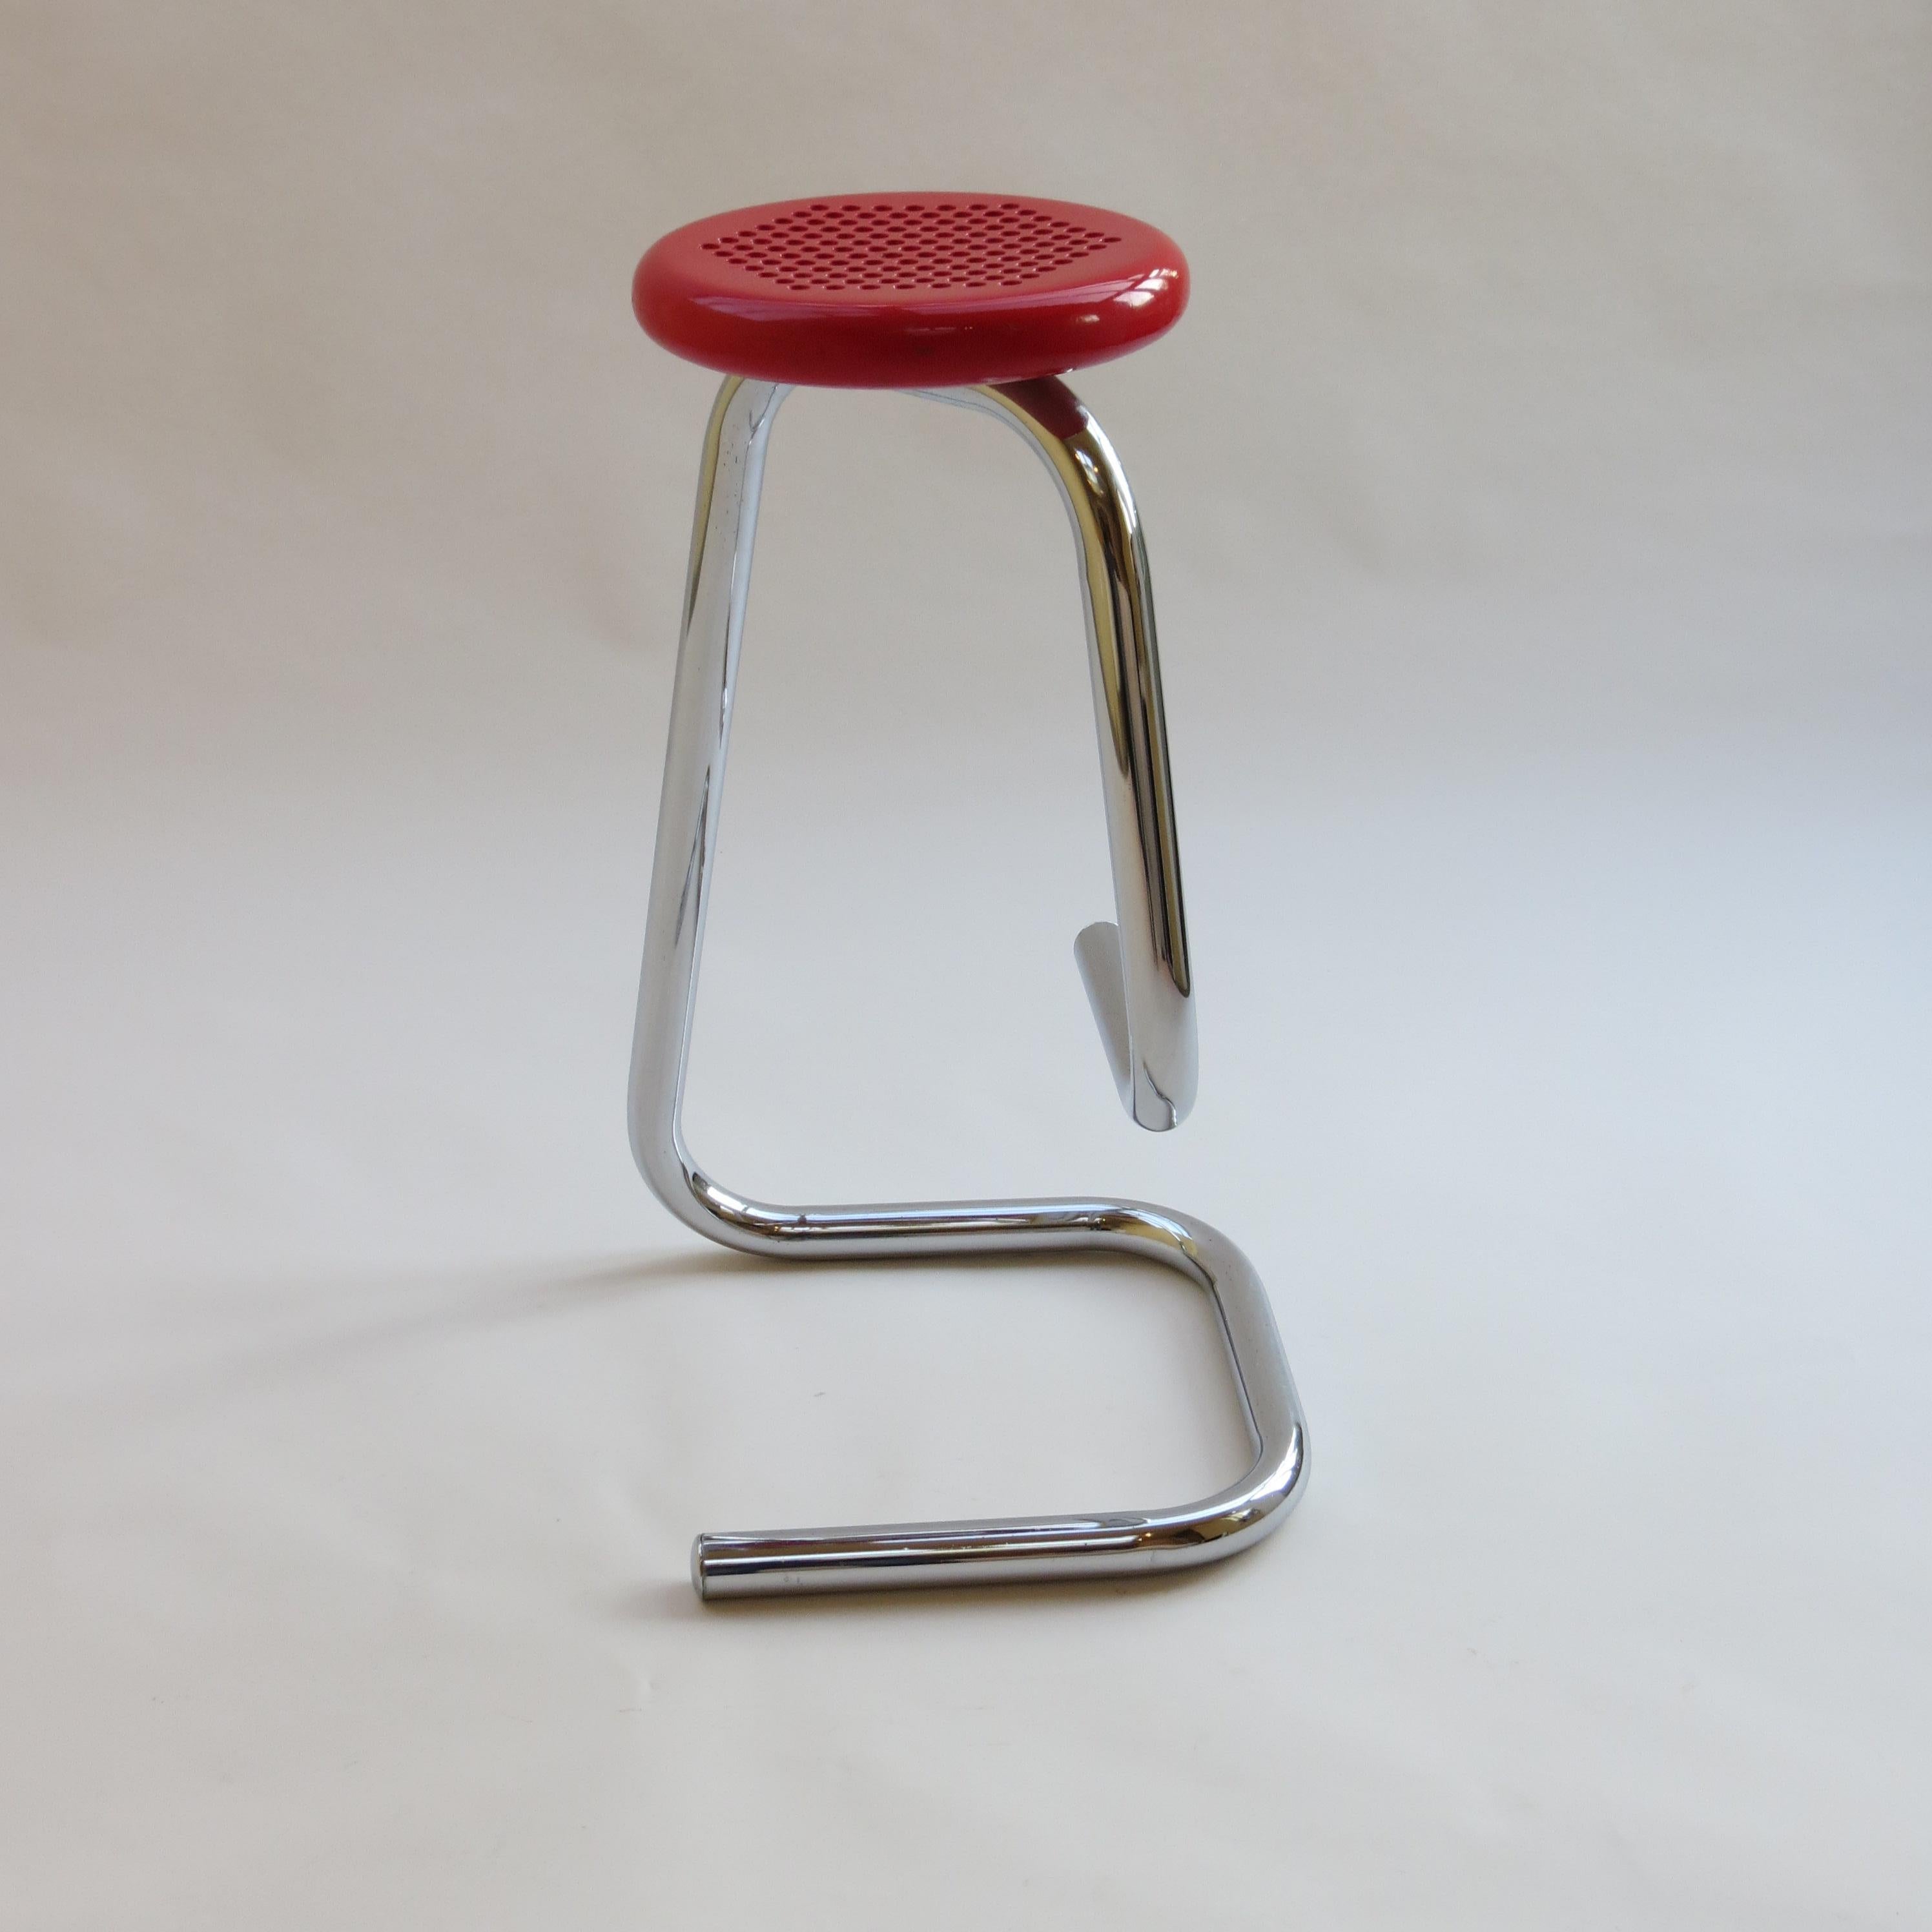 red bar stools canada